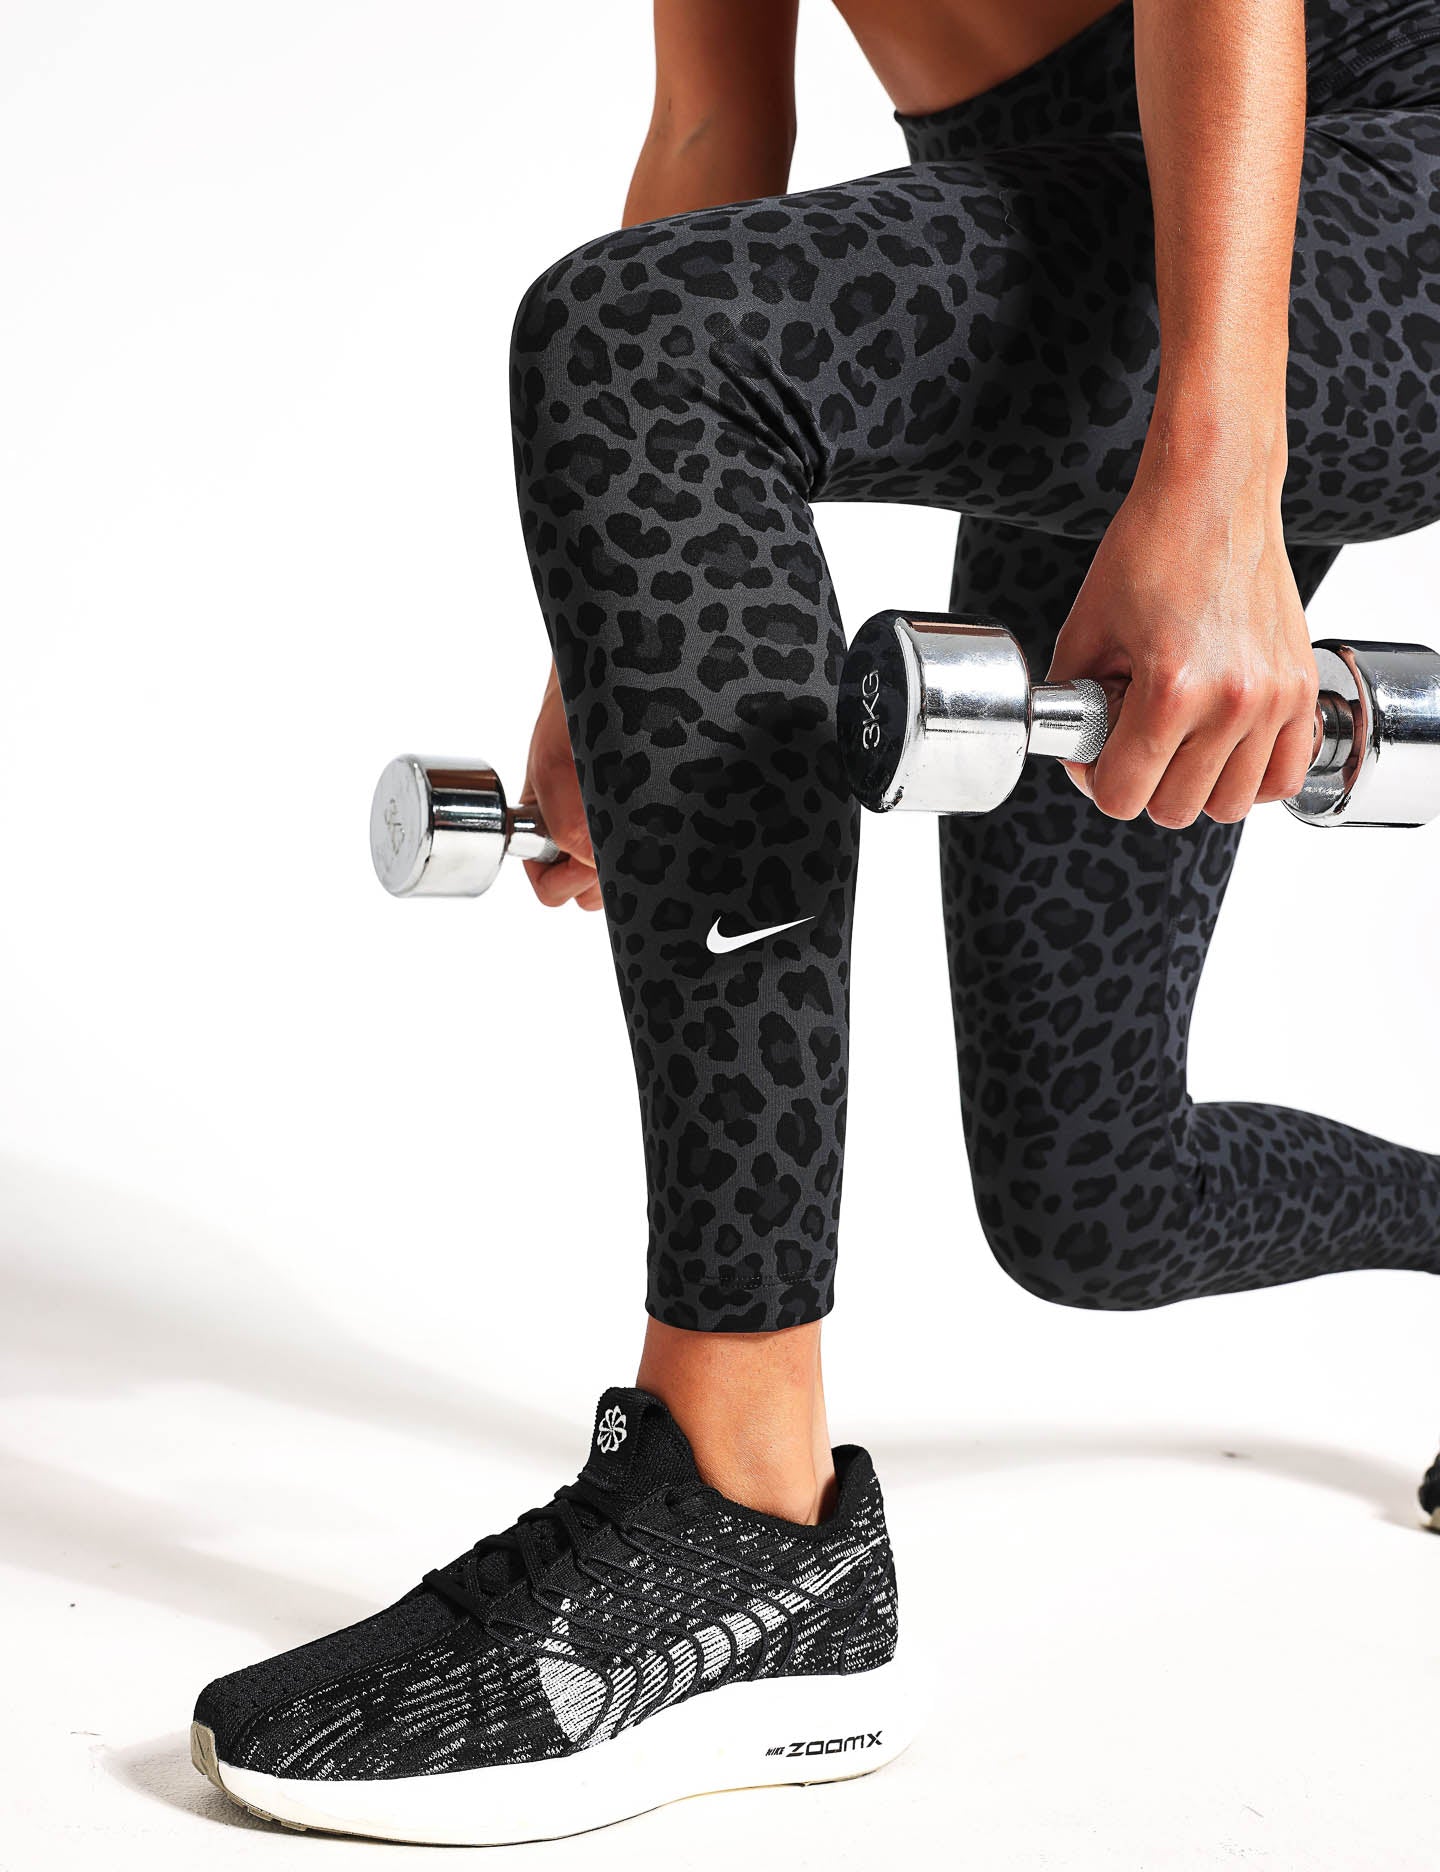 Nike Dri-FIT One High-Rise Tight - Women's 